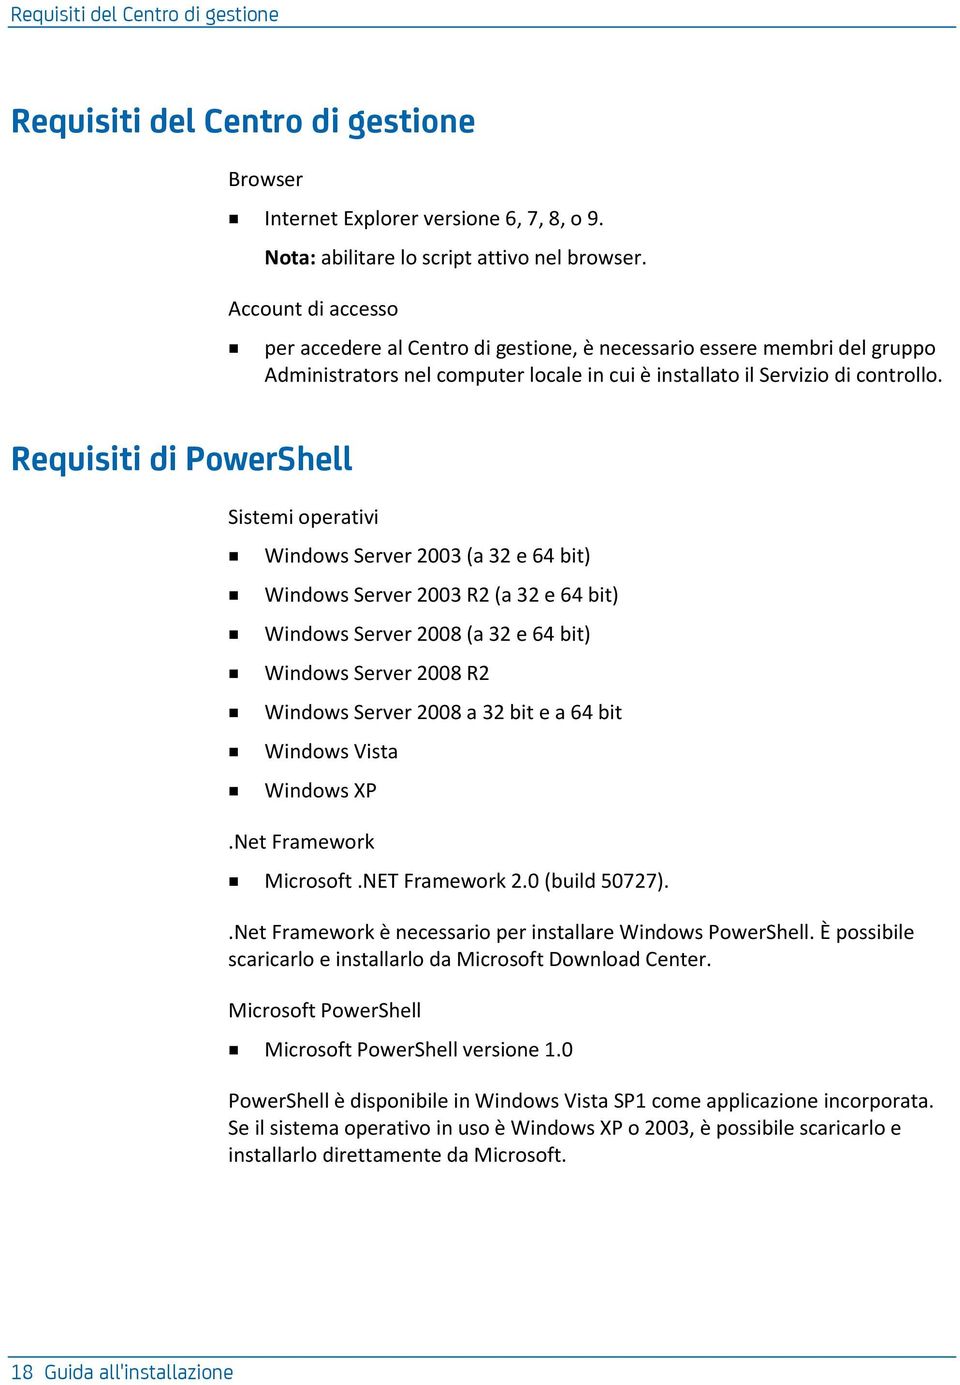 Requisiti di PowerShell Sistemi operativi Windows Server 2003 (a 32 e 64 bit) Windows Server 2003 R2 (a 32 e 64 bit) Windows Server 2008 (a 32 e 64 bit) Windows Server 2008 R2 Windows Server 2008 a